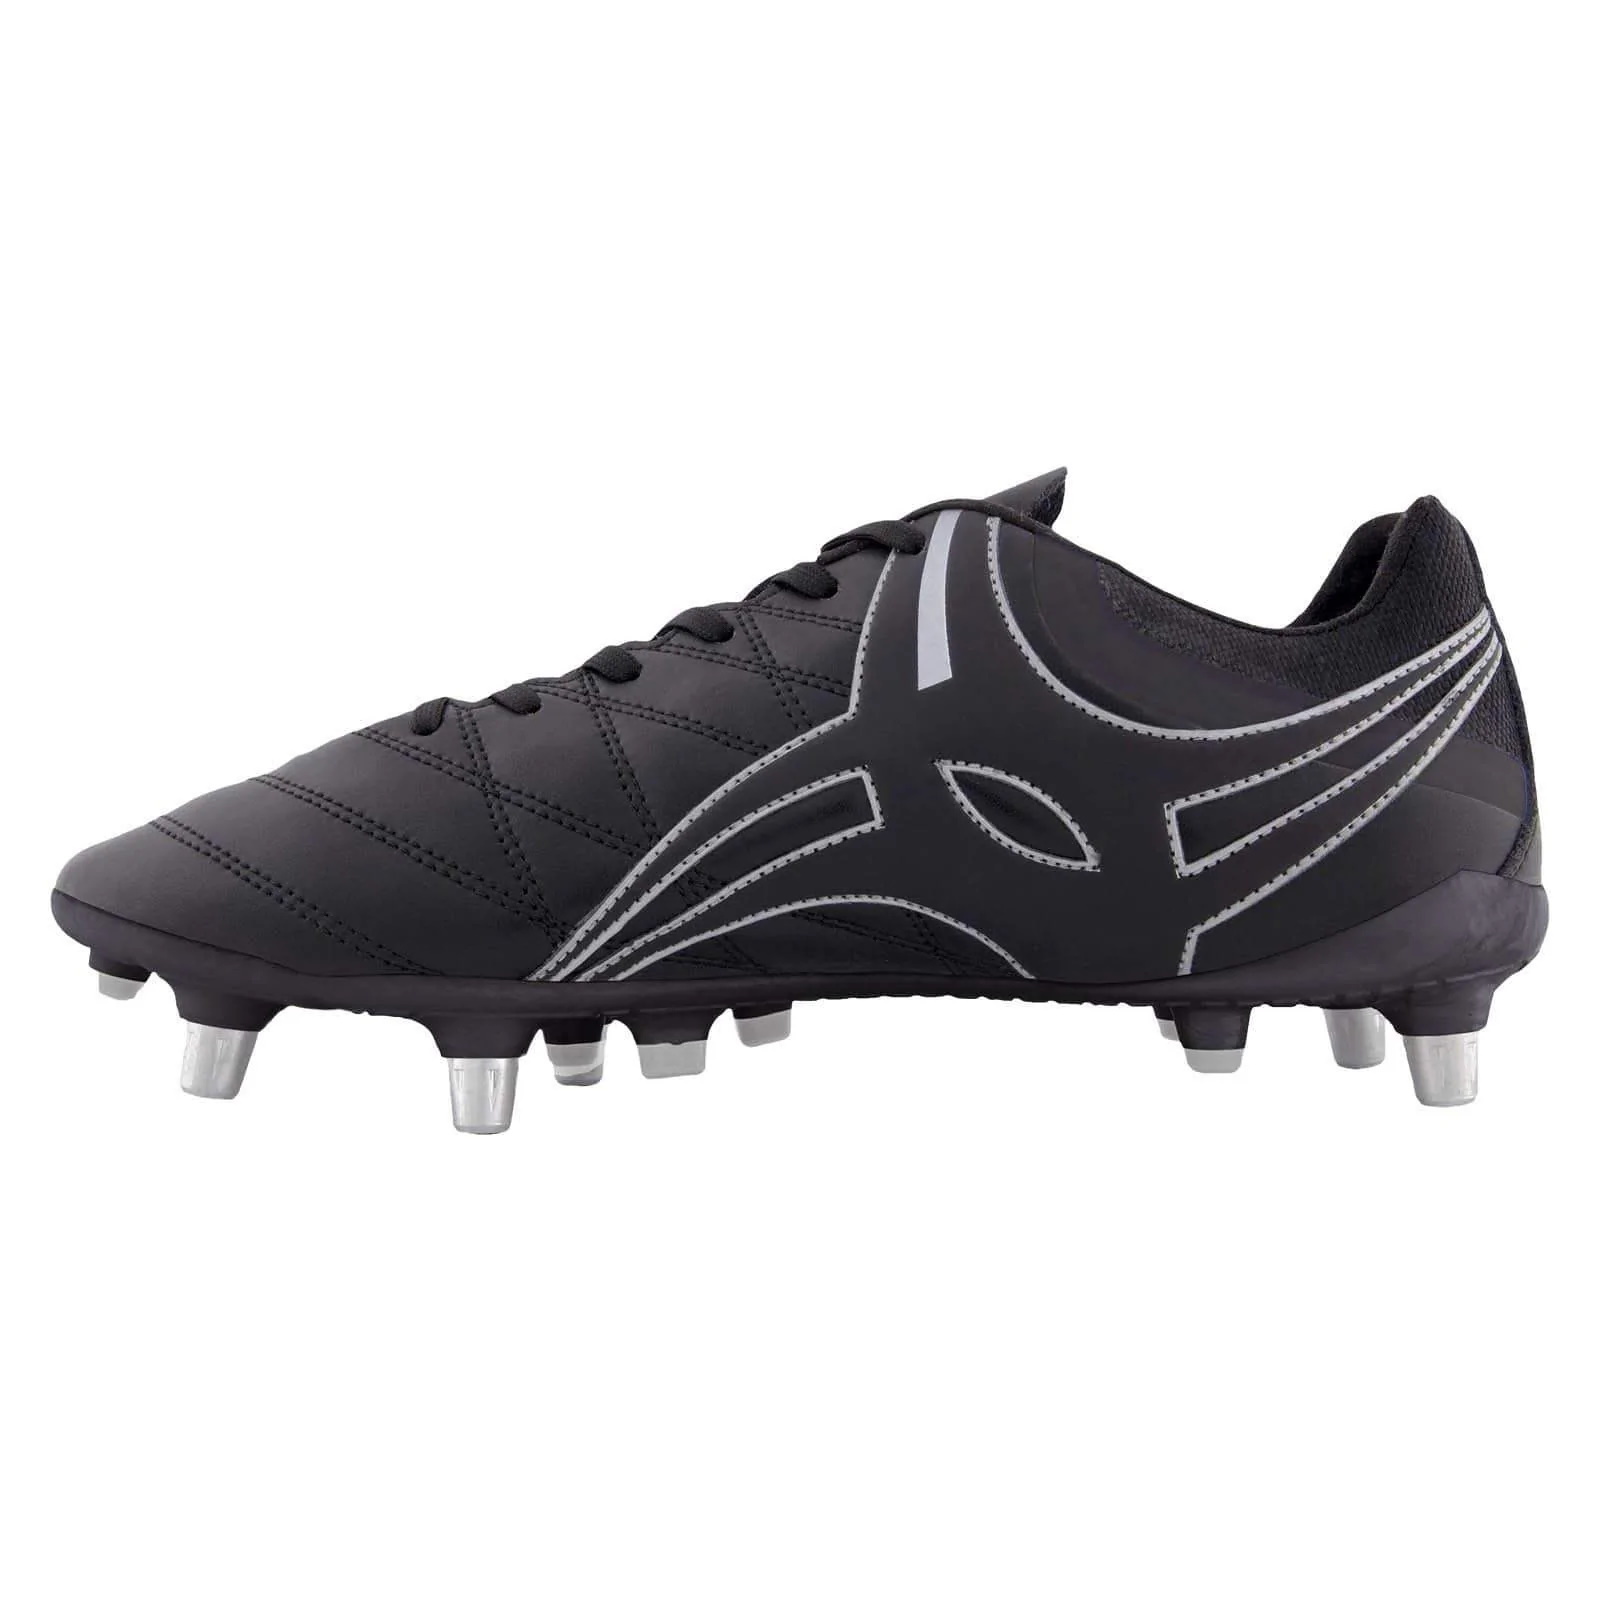 Ilbert rugby footwear plus gilbert kaizen 1 0 power rugby boots 12167429685363 2000x.progressive